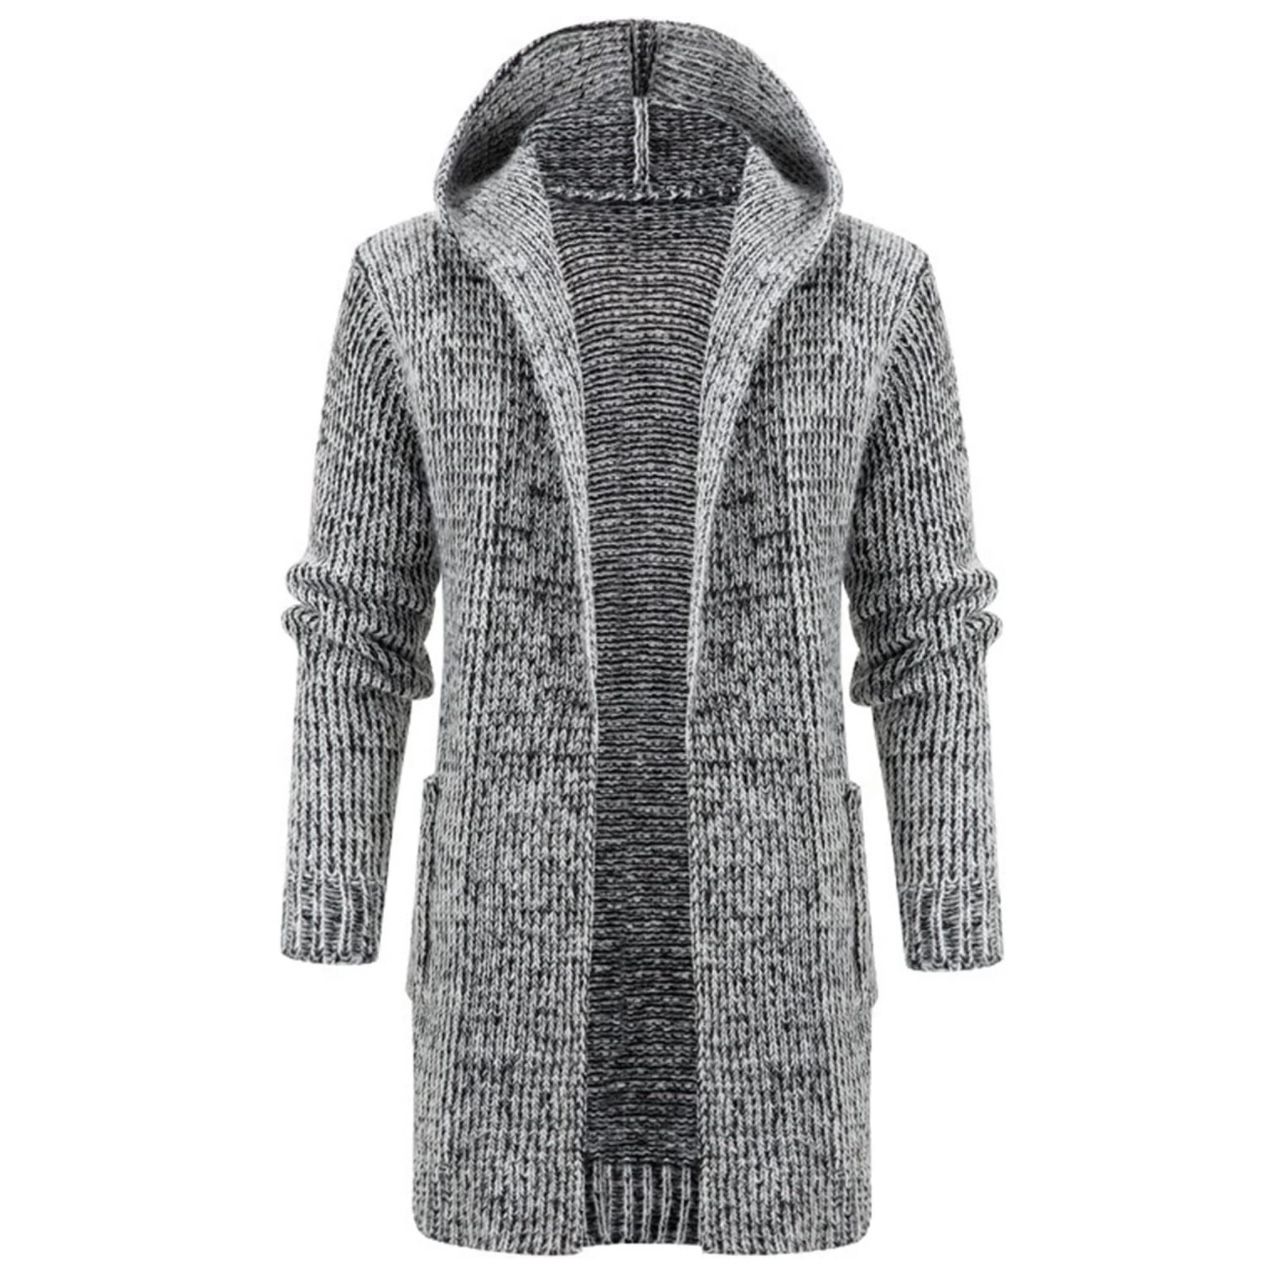 Sweater Cardigan Jacket Hoodie Long Sleeve Winter Blouse Tee Sweater Sweatshirt Shirt Knitted Coat